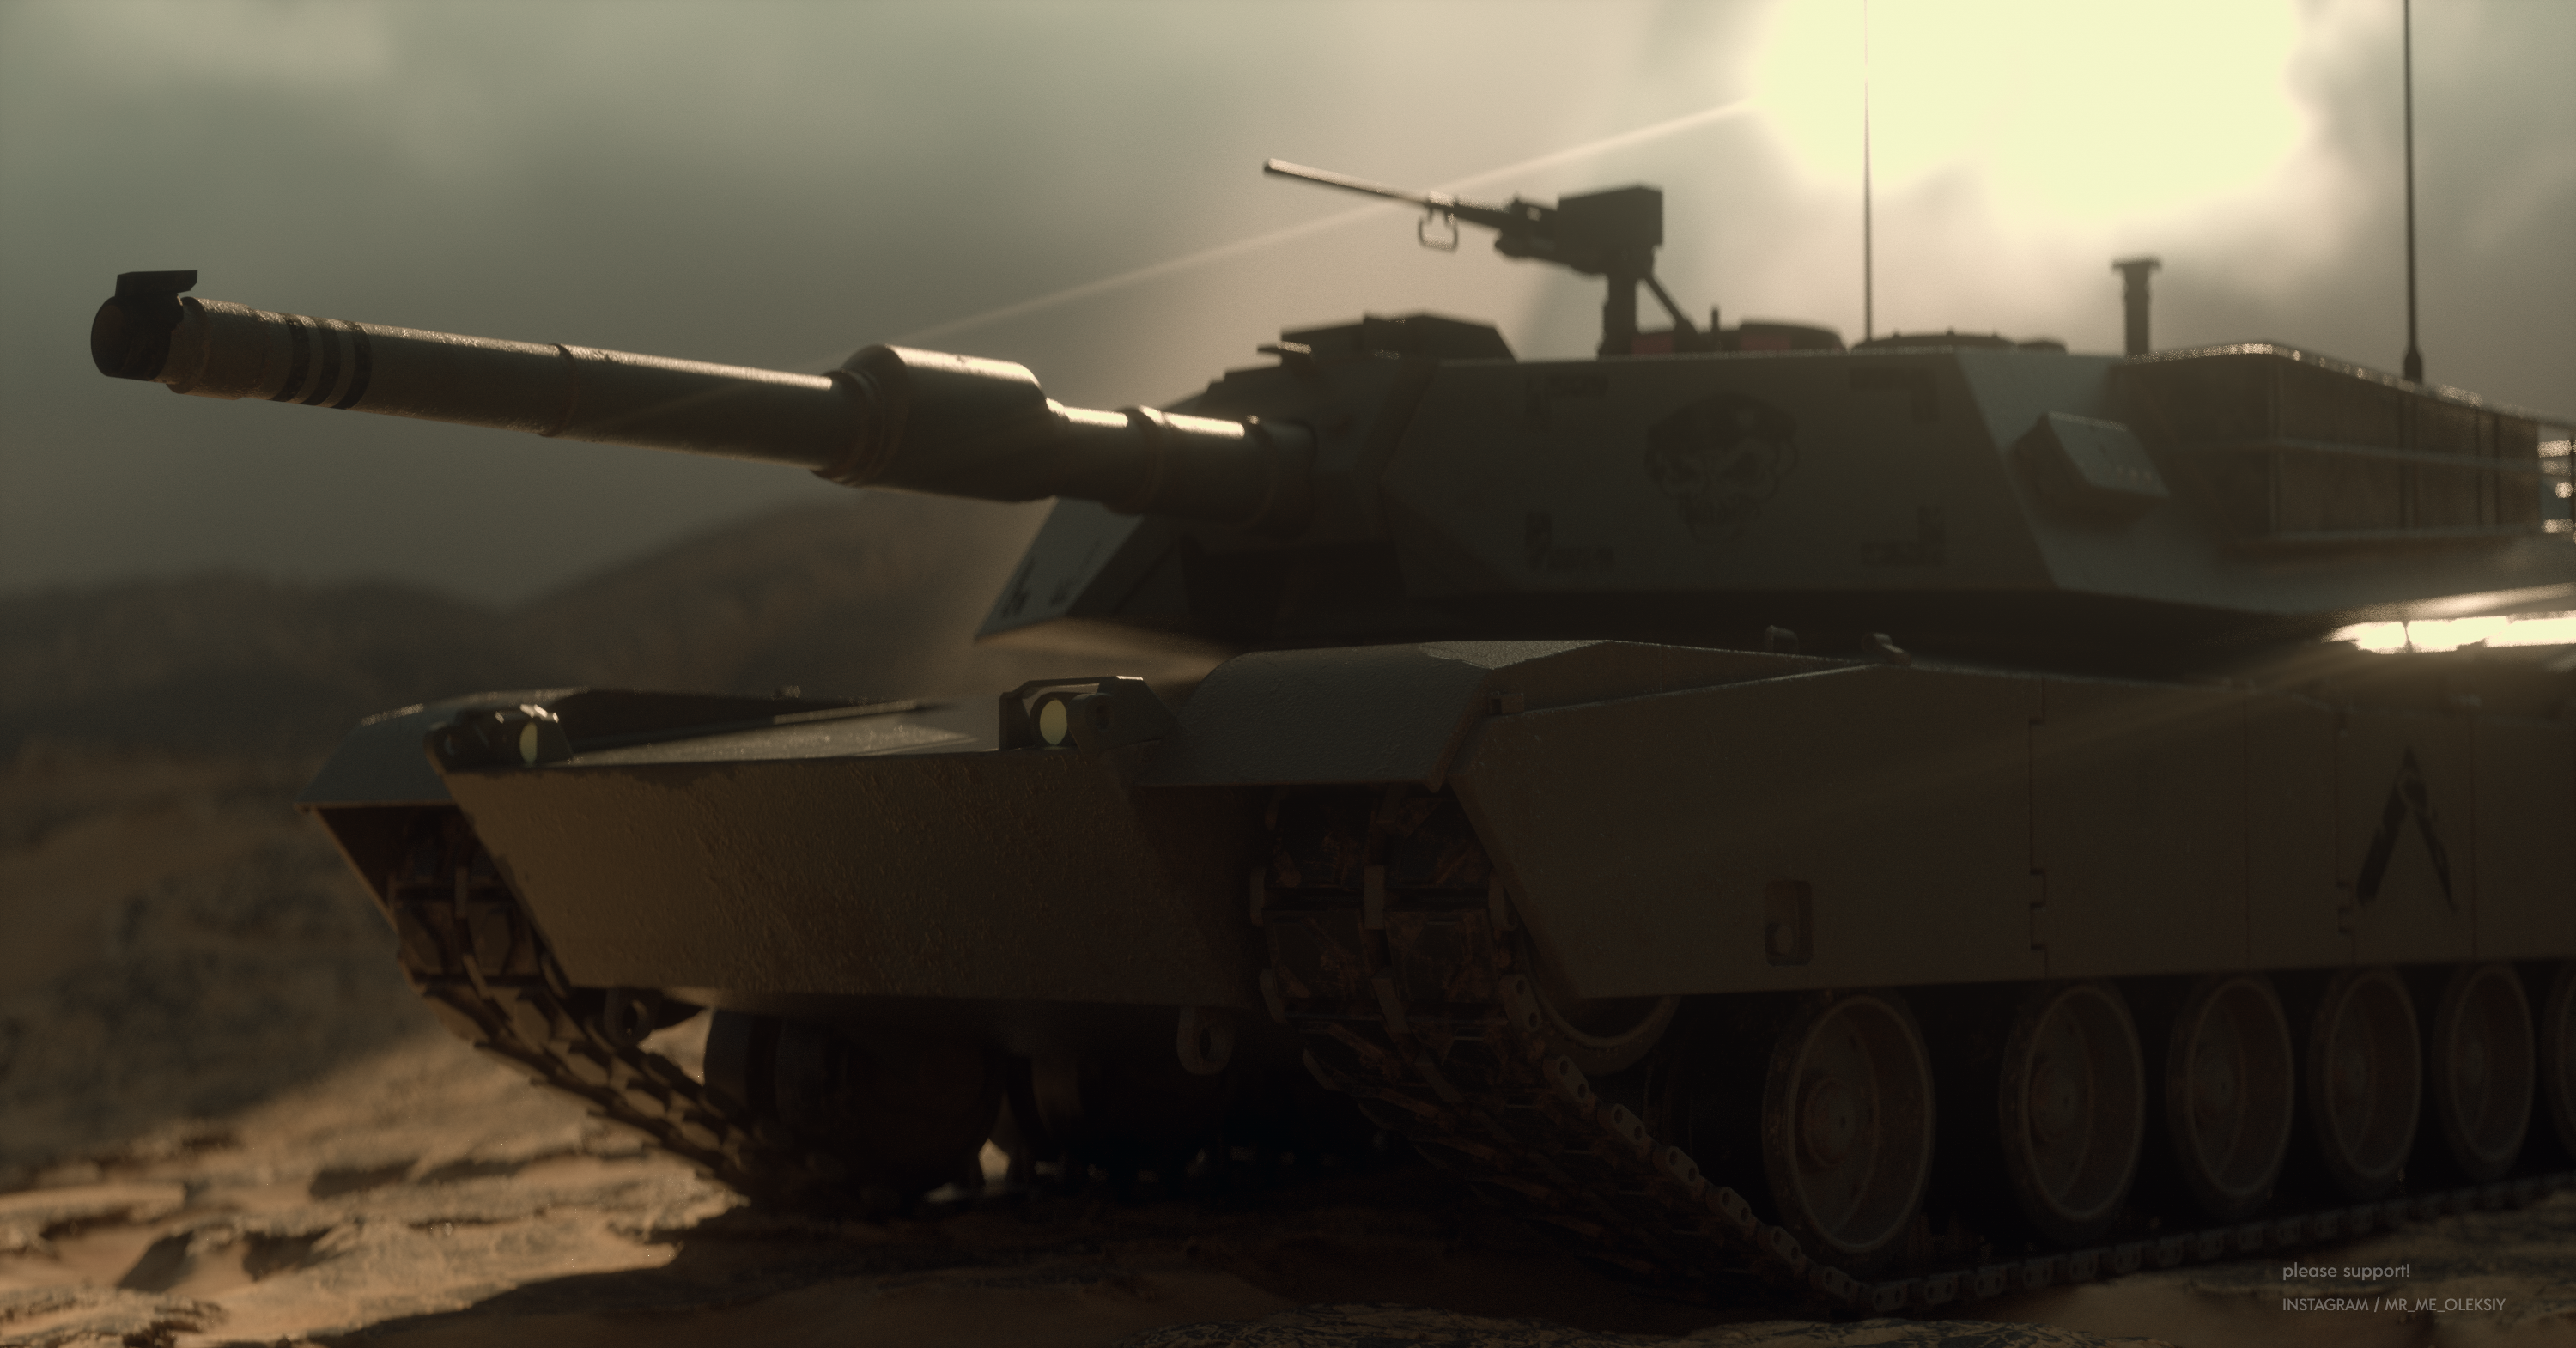 General 3000x1570 tank military landscape low quality terrain desert CGI M1 Abrams